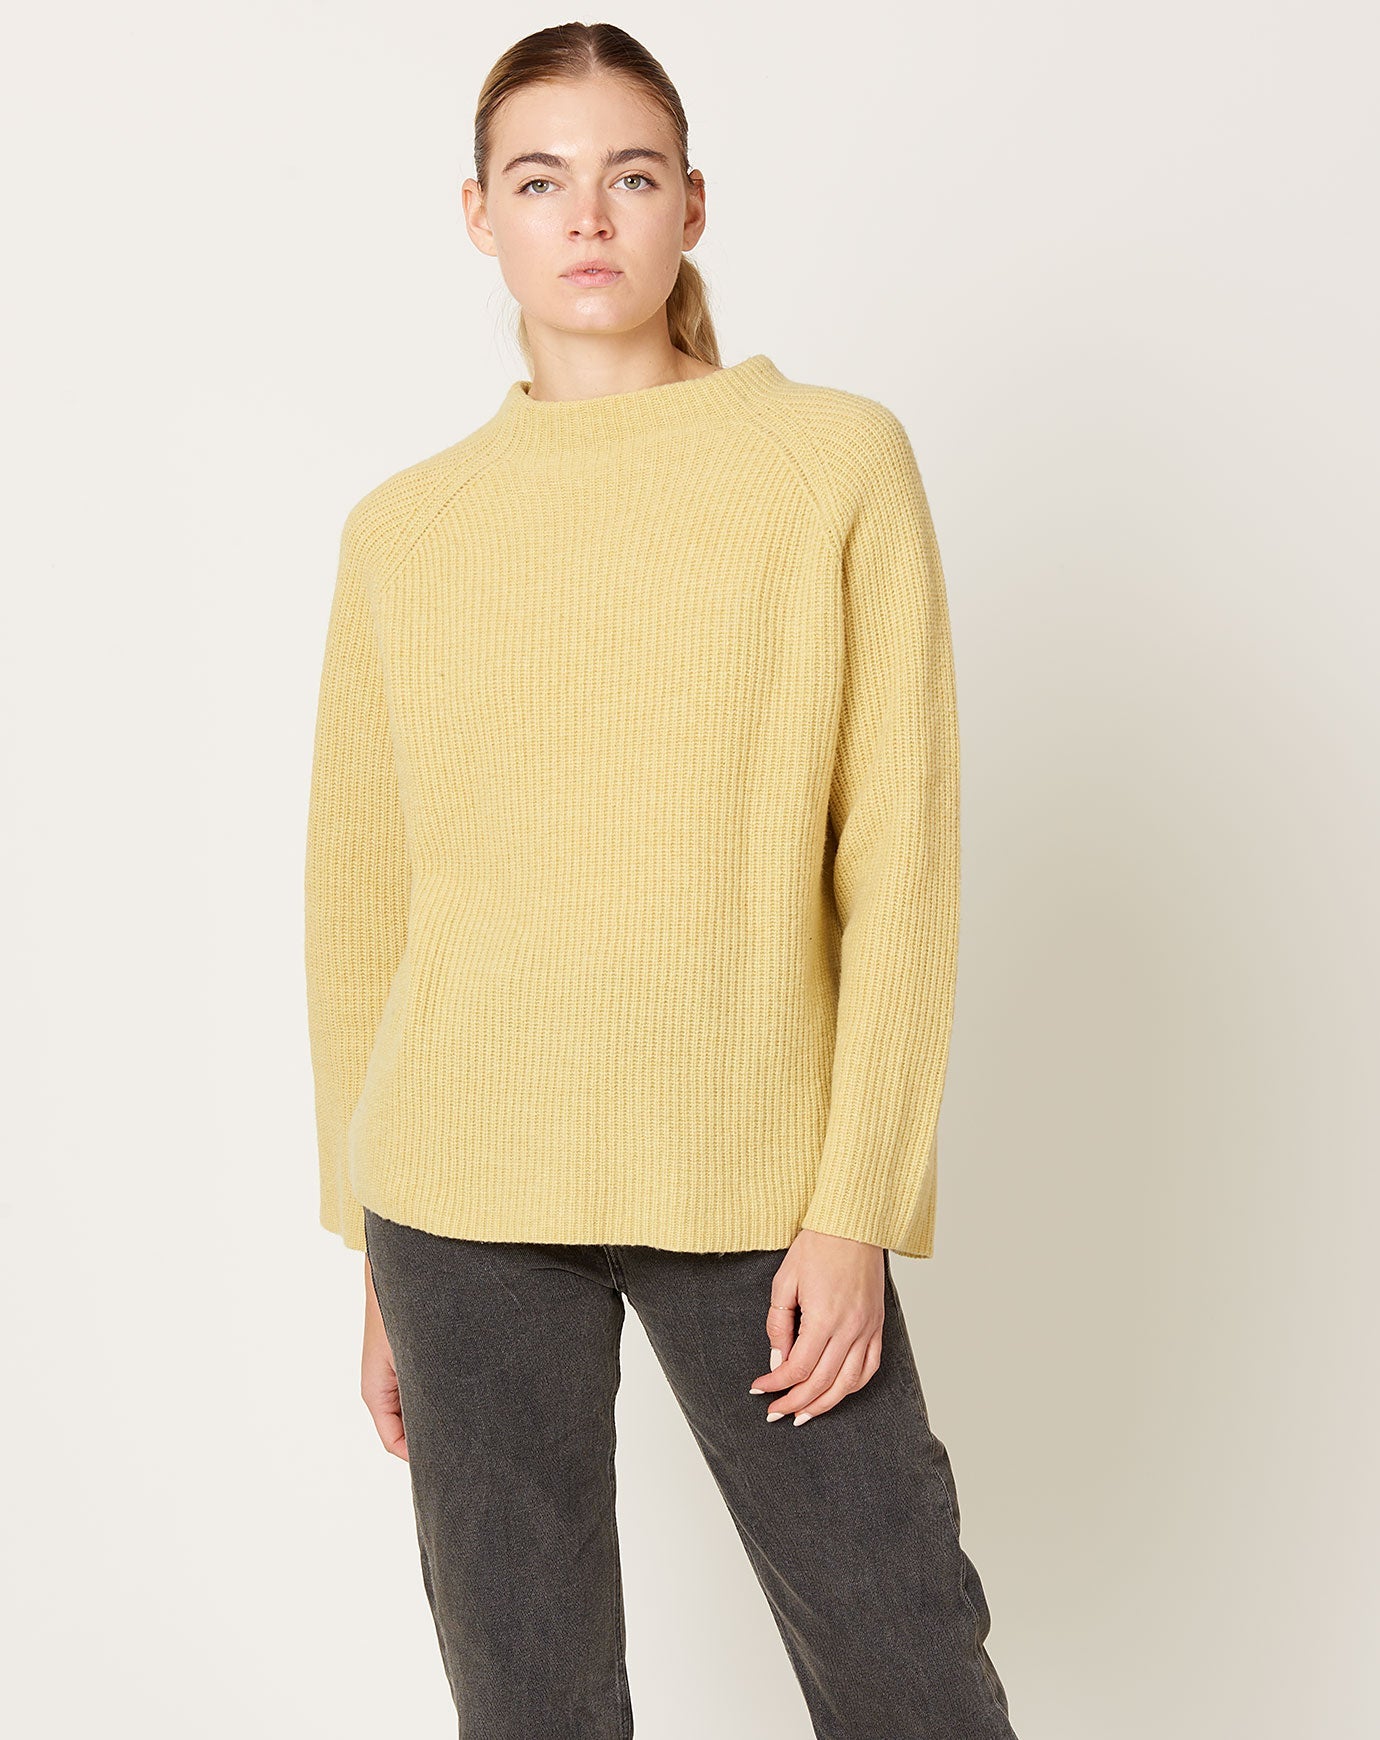 Demylee Fajar Sweater in Straw Yellow